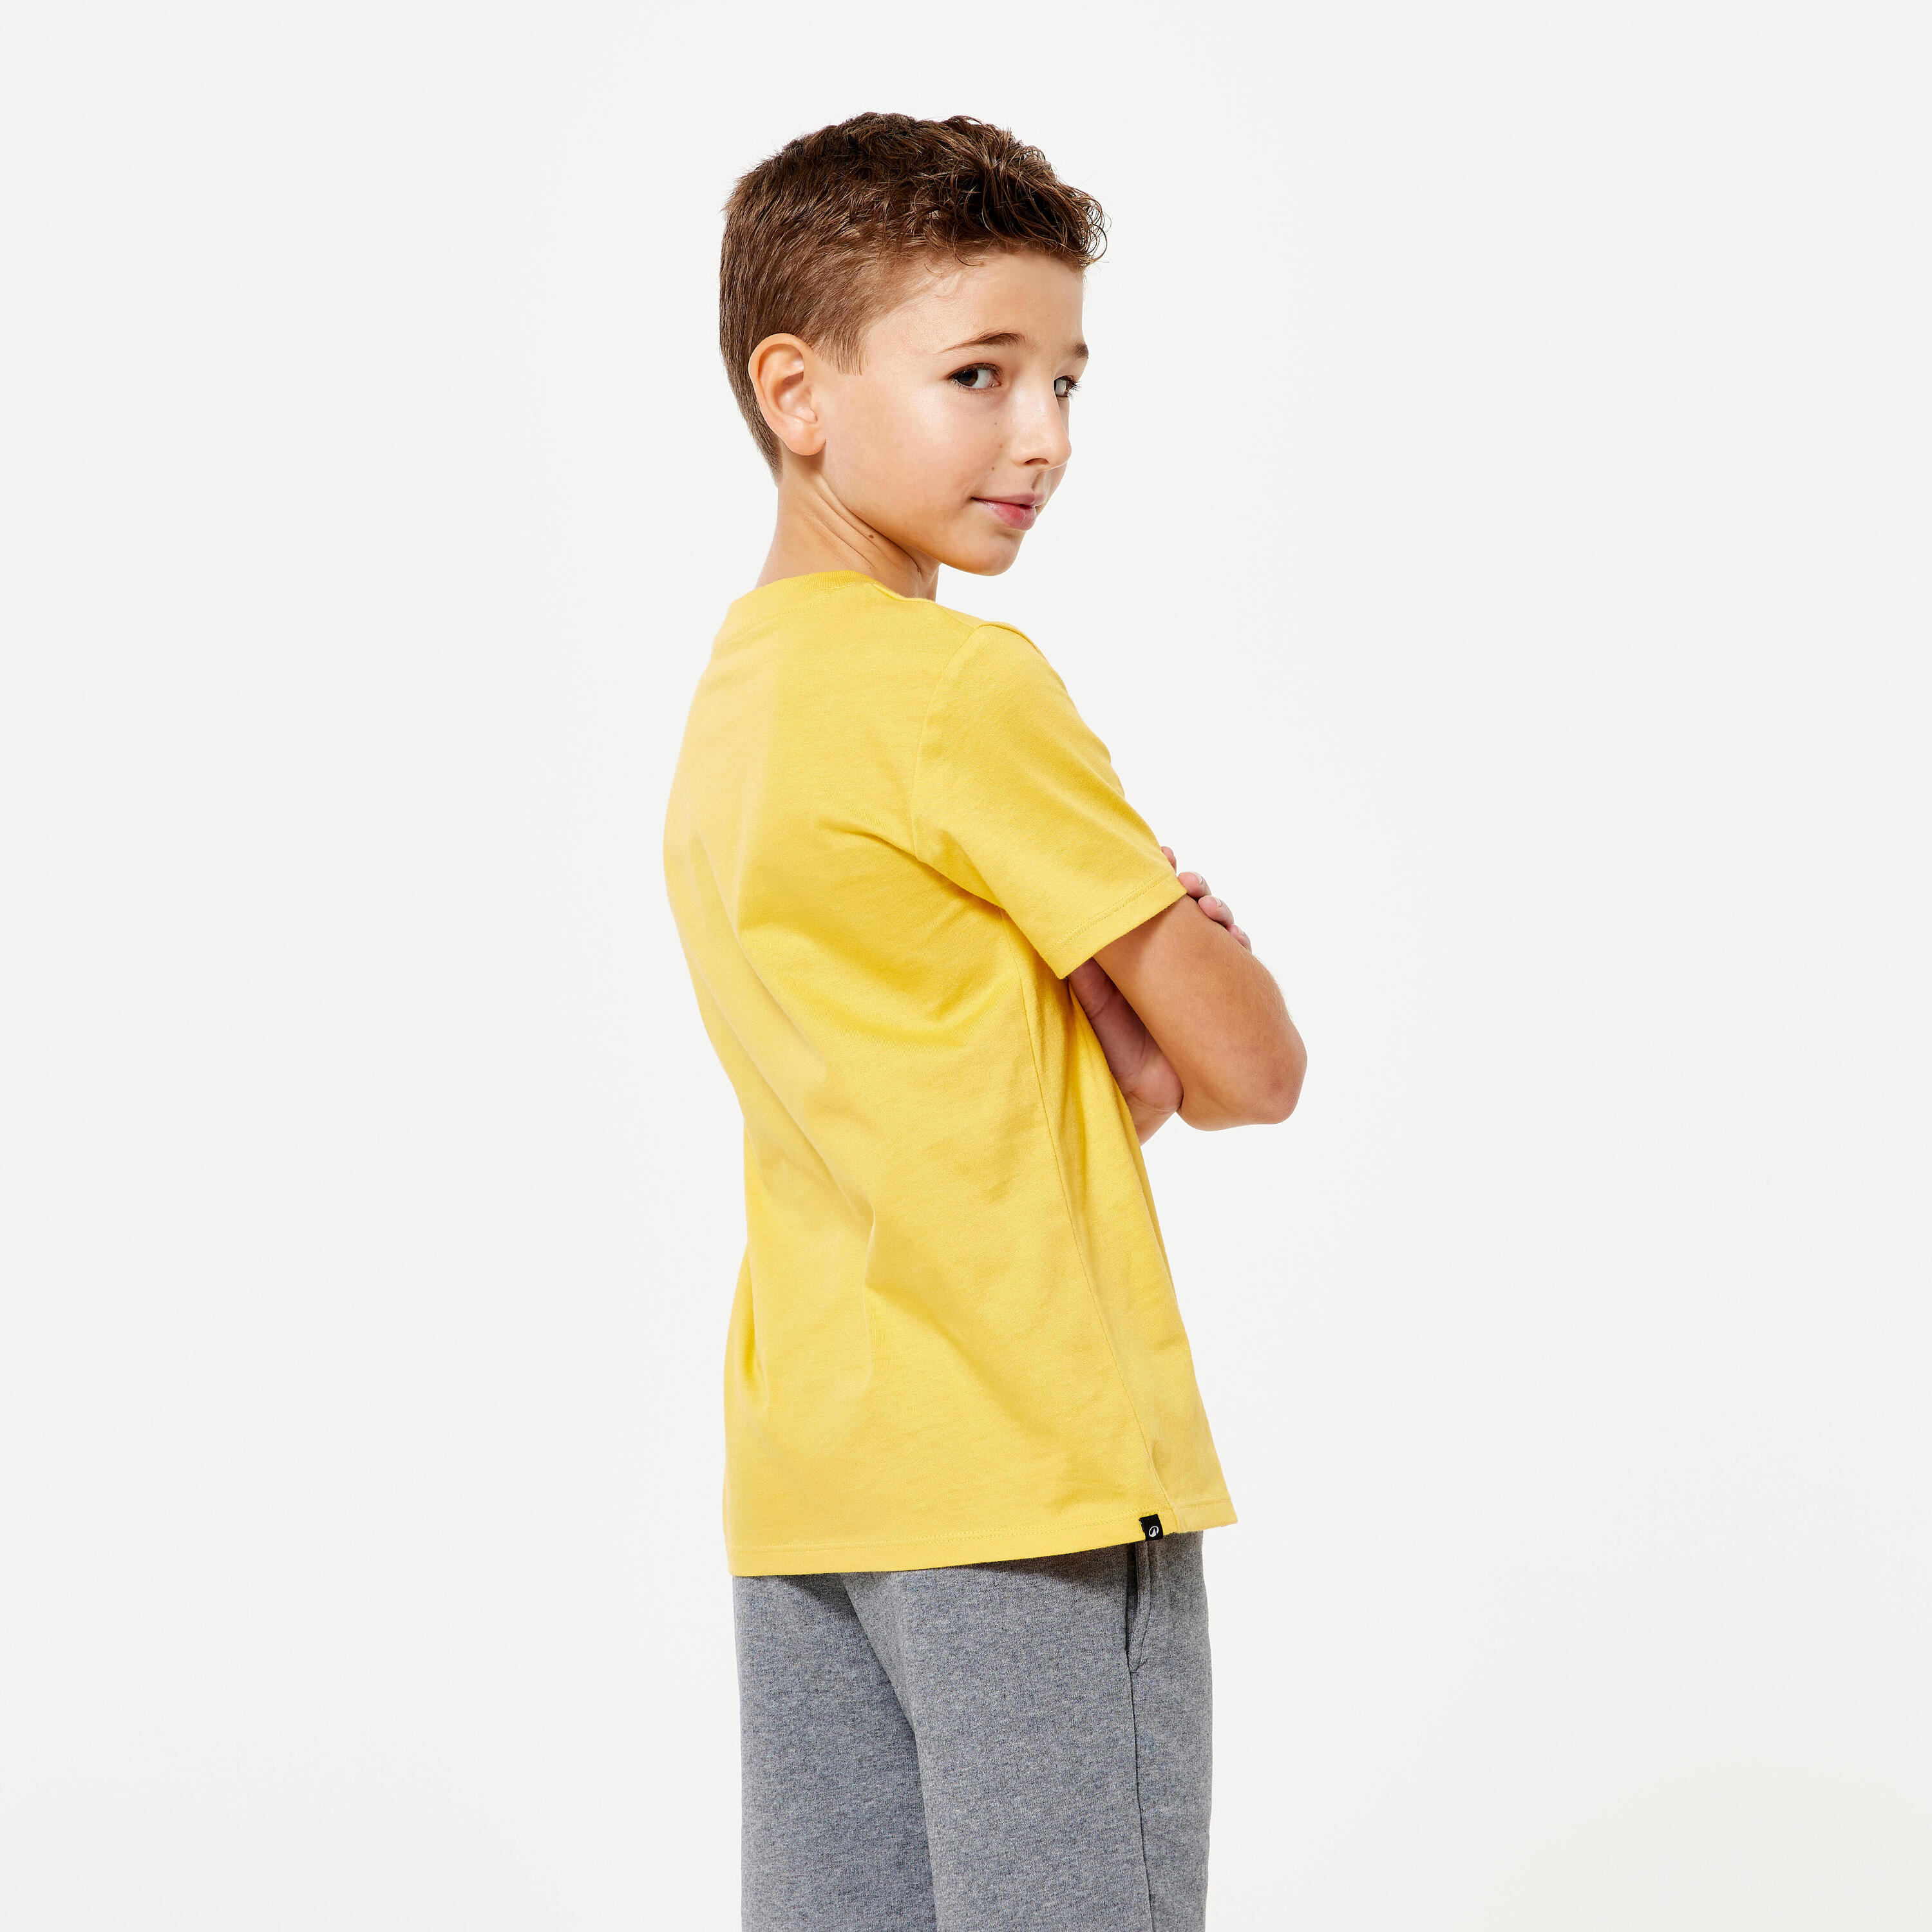 Kids' Unisex Cotton T-Shirt - Mustard 4/6